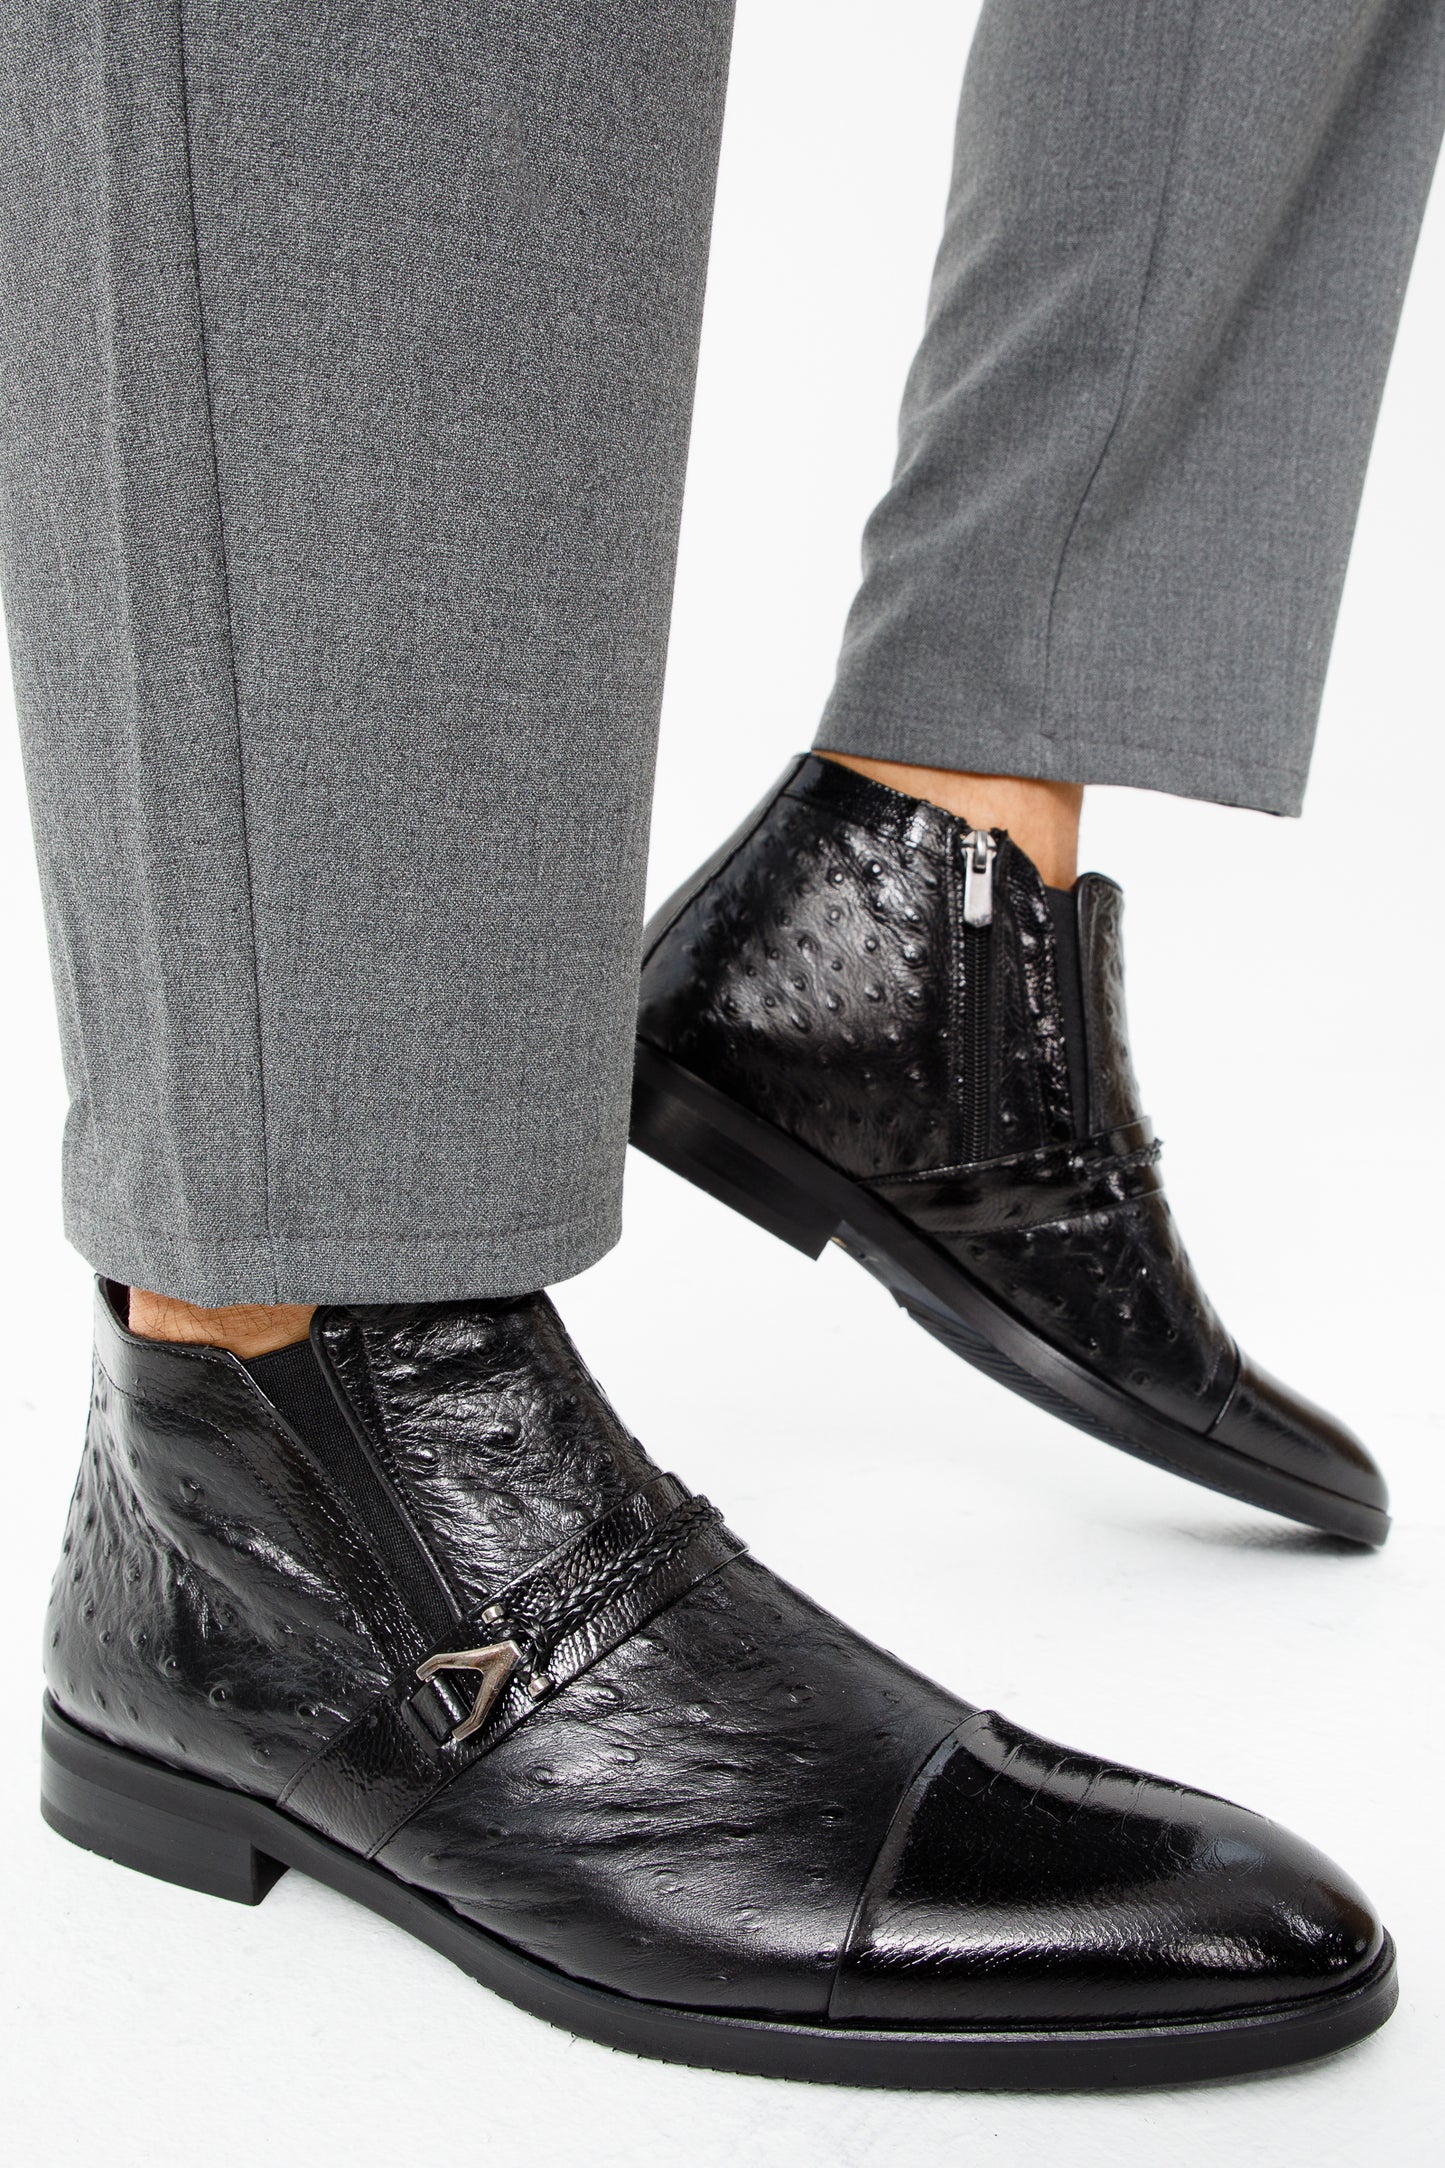 The Dallas Black Leather Bit Ankle Zip-Up Dress Men Boot